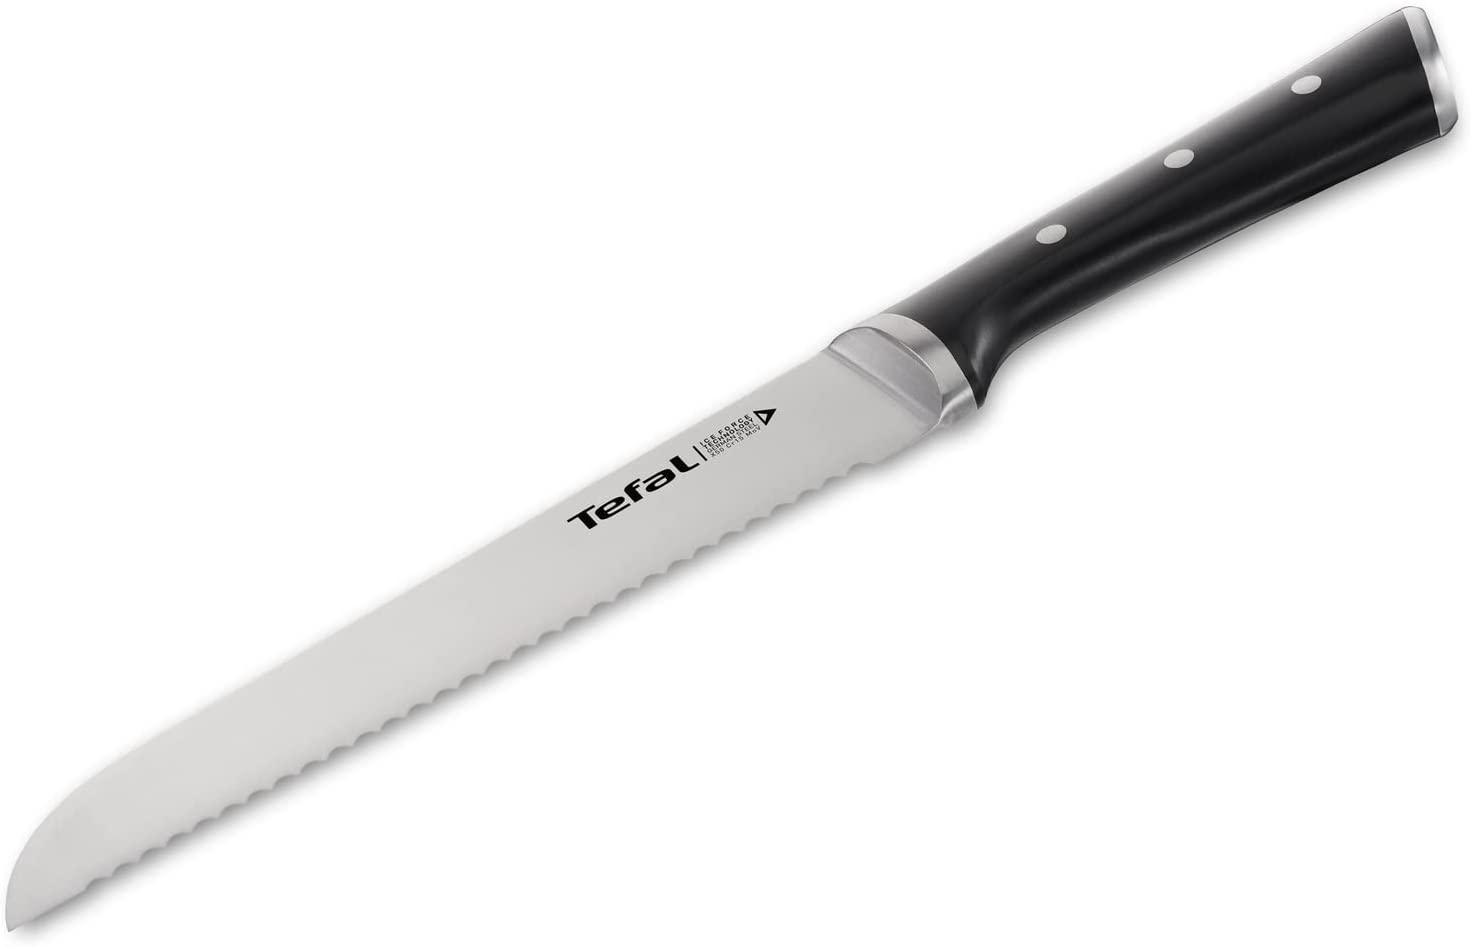 Tefal Ingenio Ice Force Knife - Stainless Steel, Black.